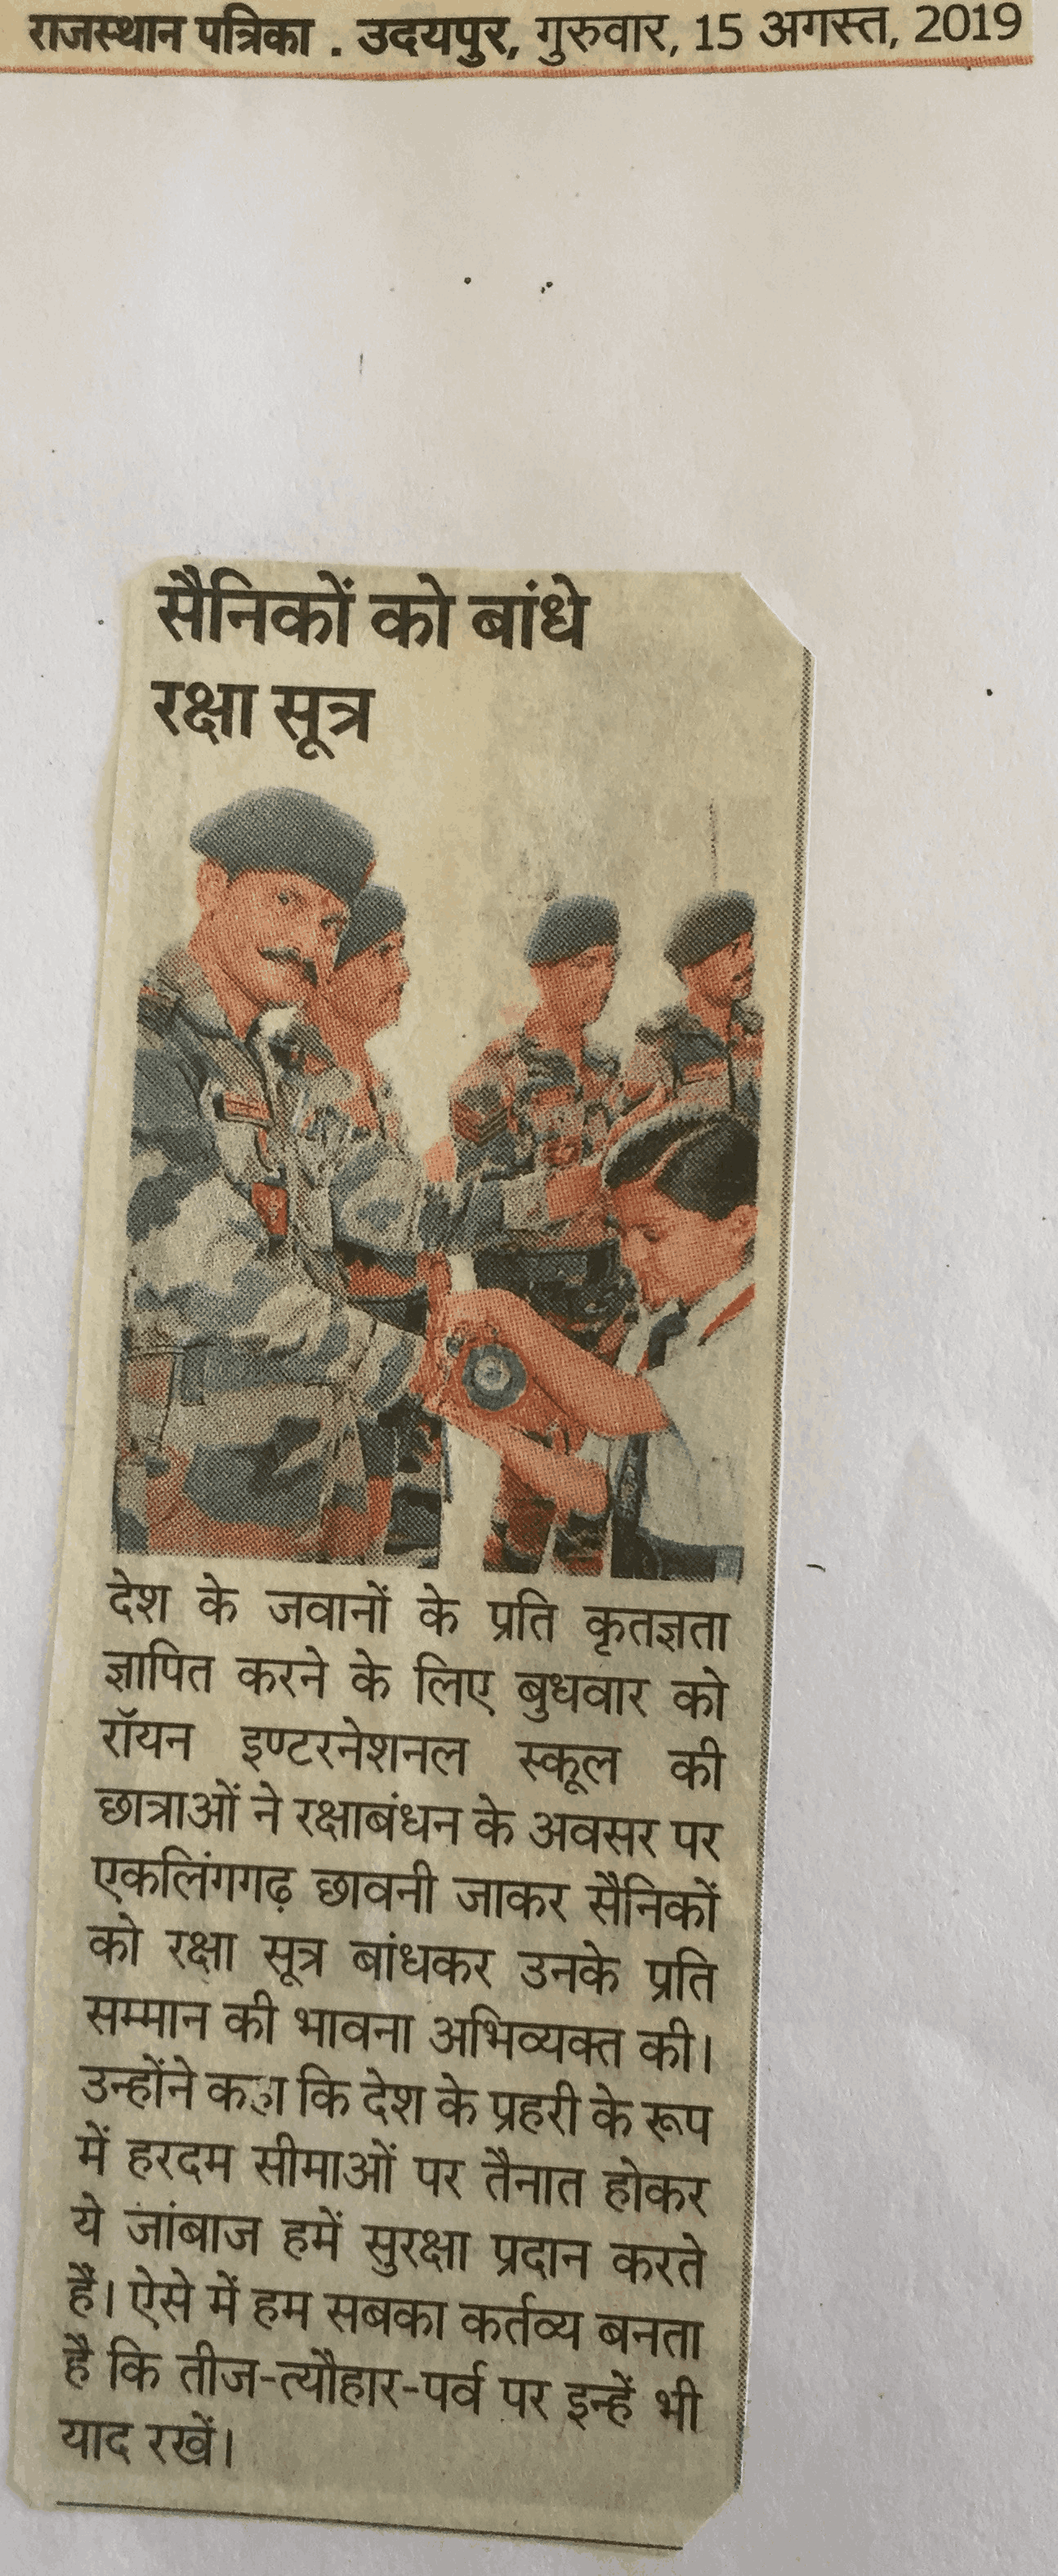 Students Celebrated Raksha Bandhan with Soldiers